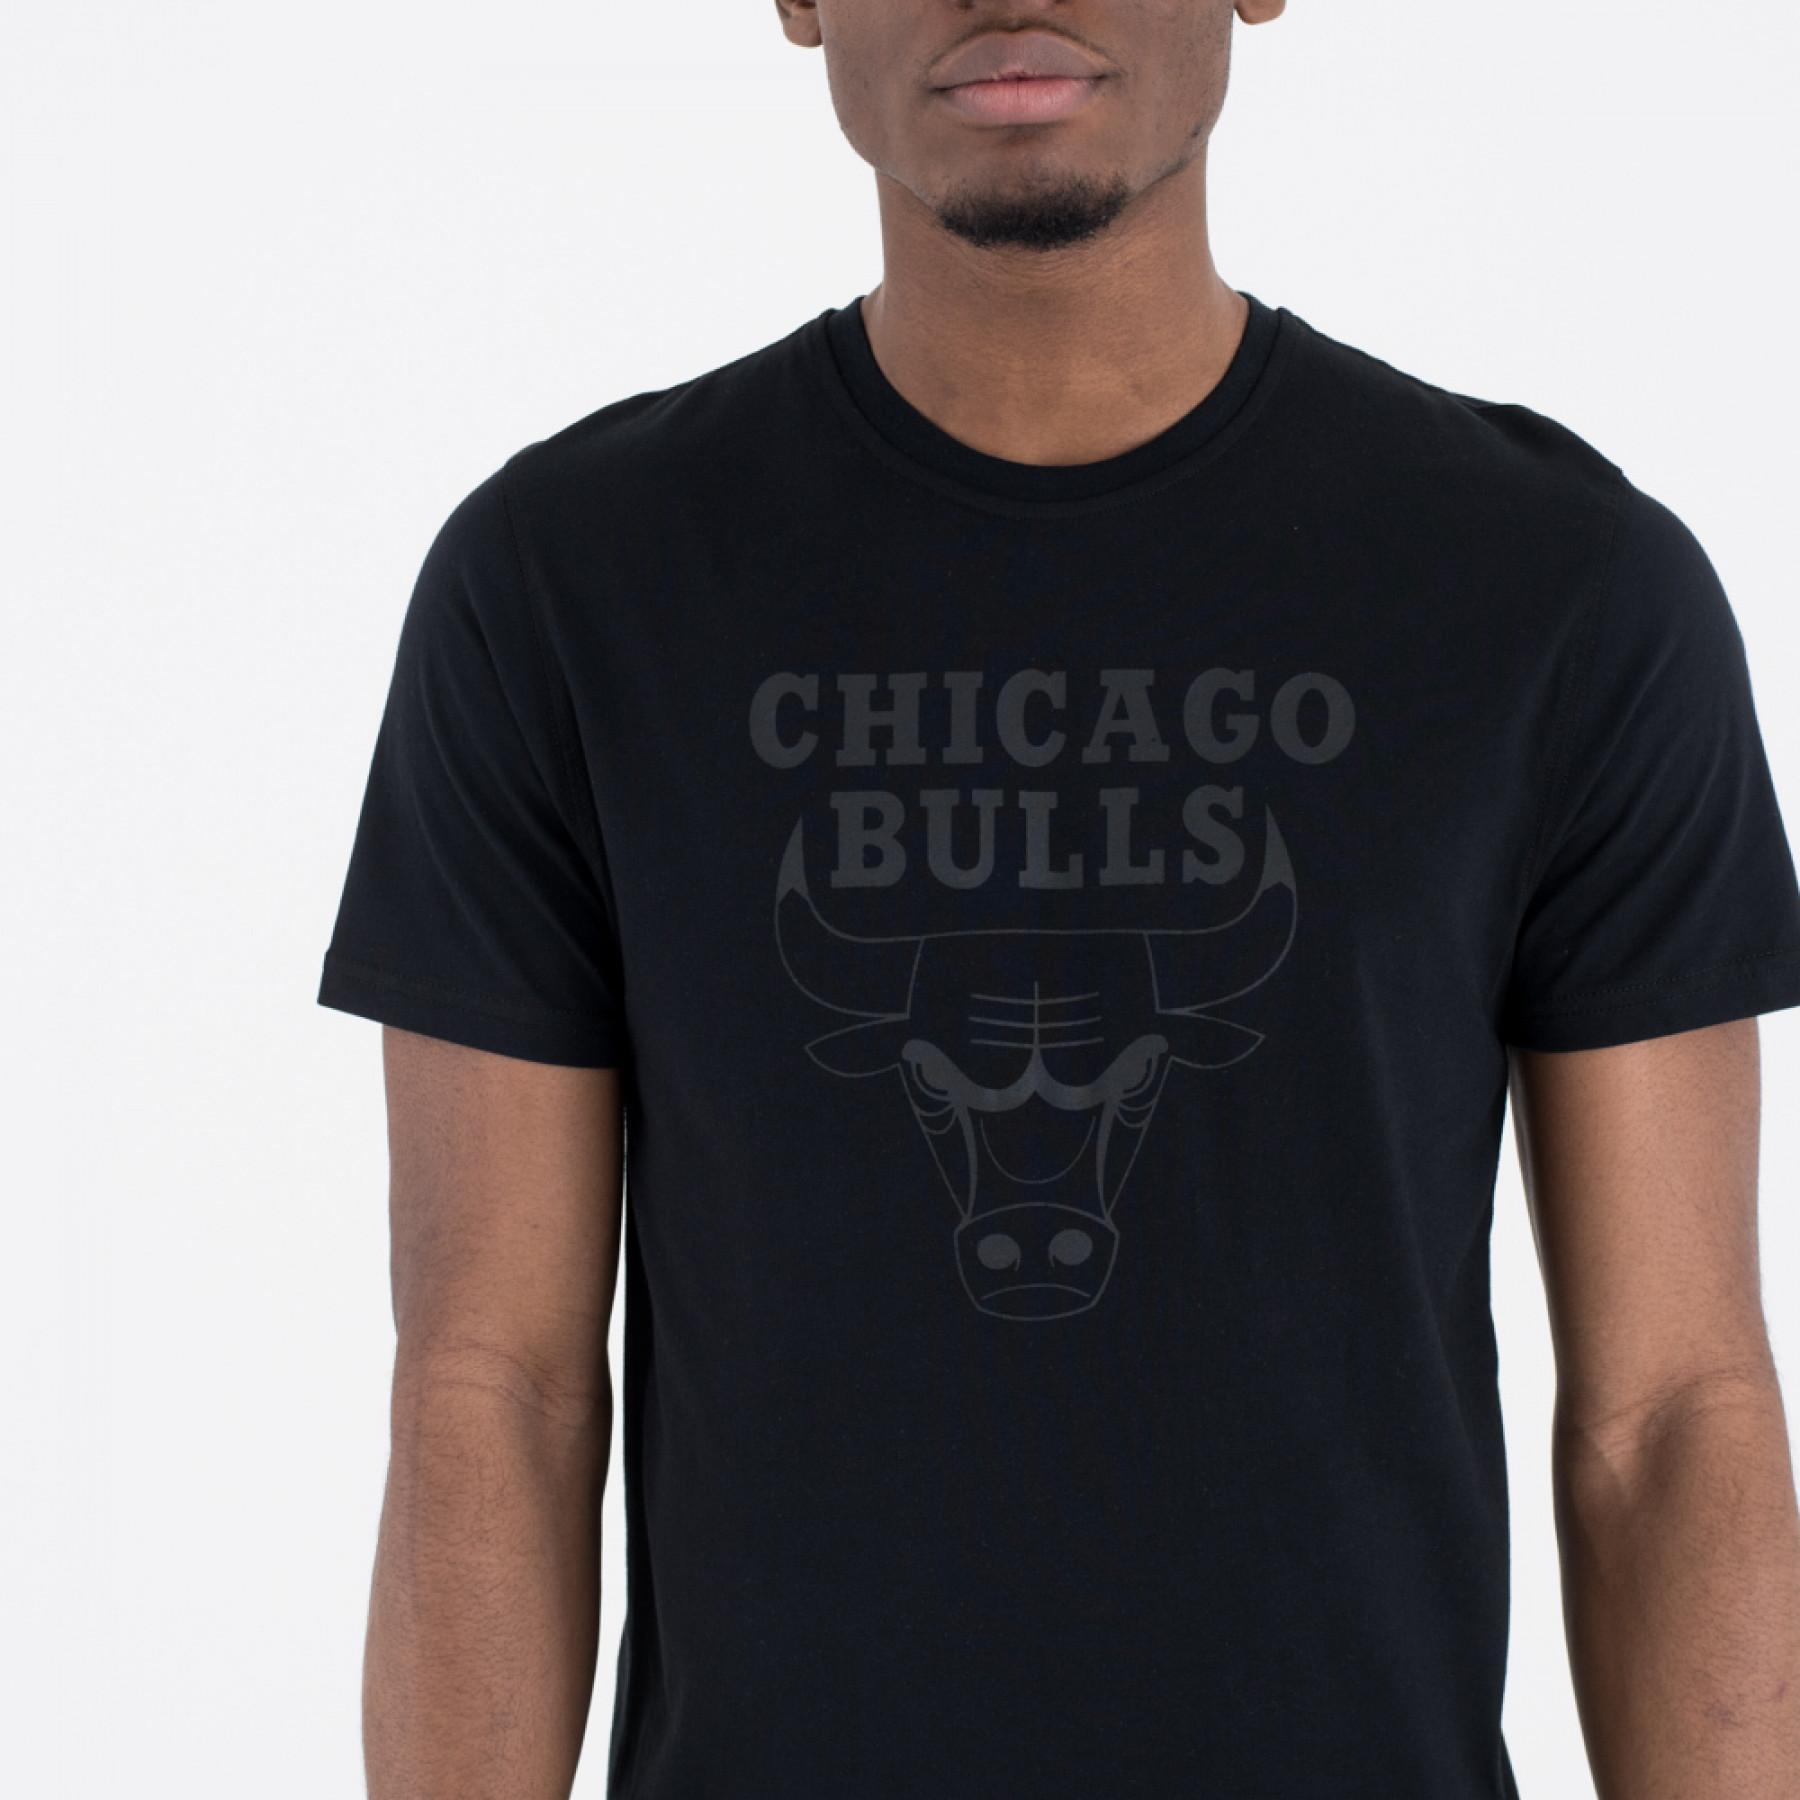  New EraT - s h i r t   logo Chicago Bulls